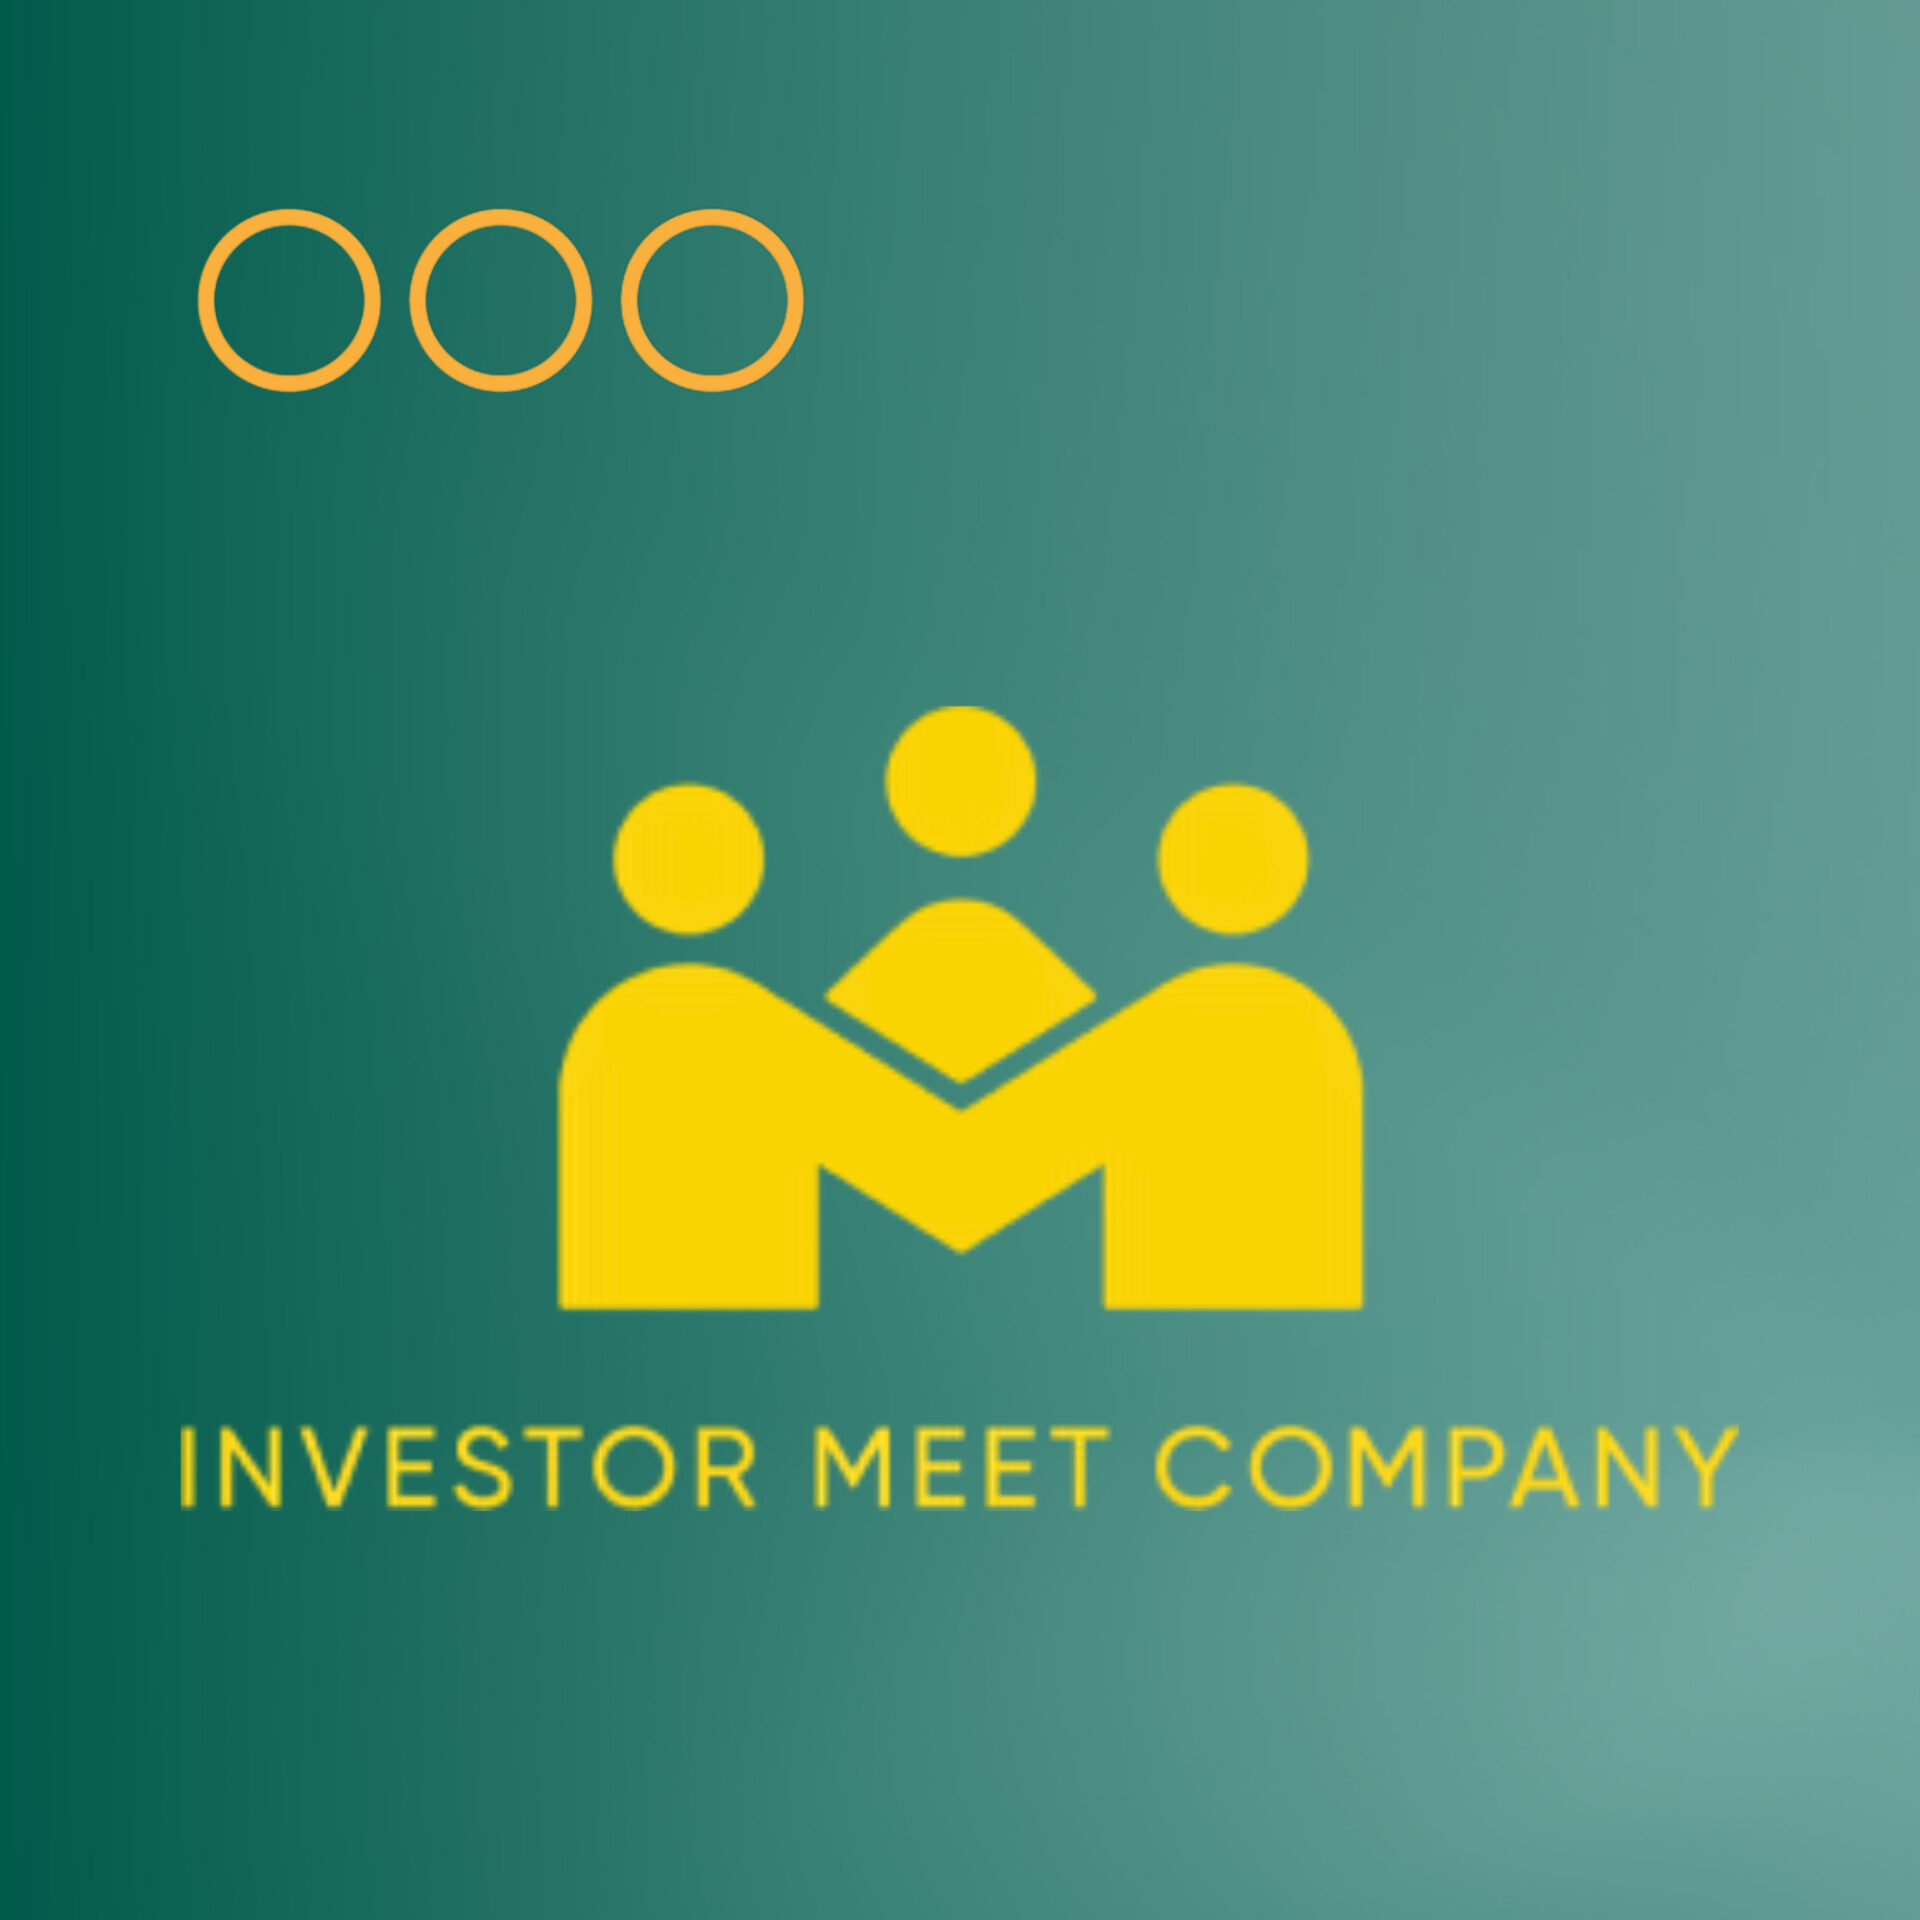 ROOF Investor Meet Company